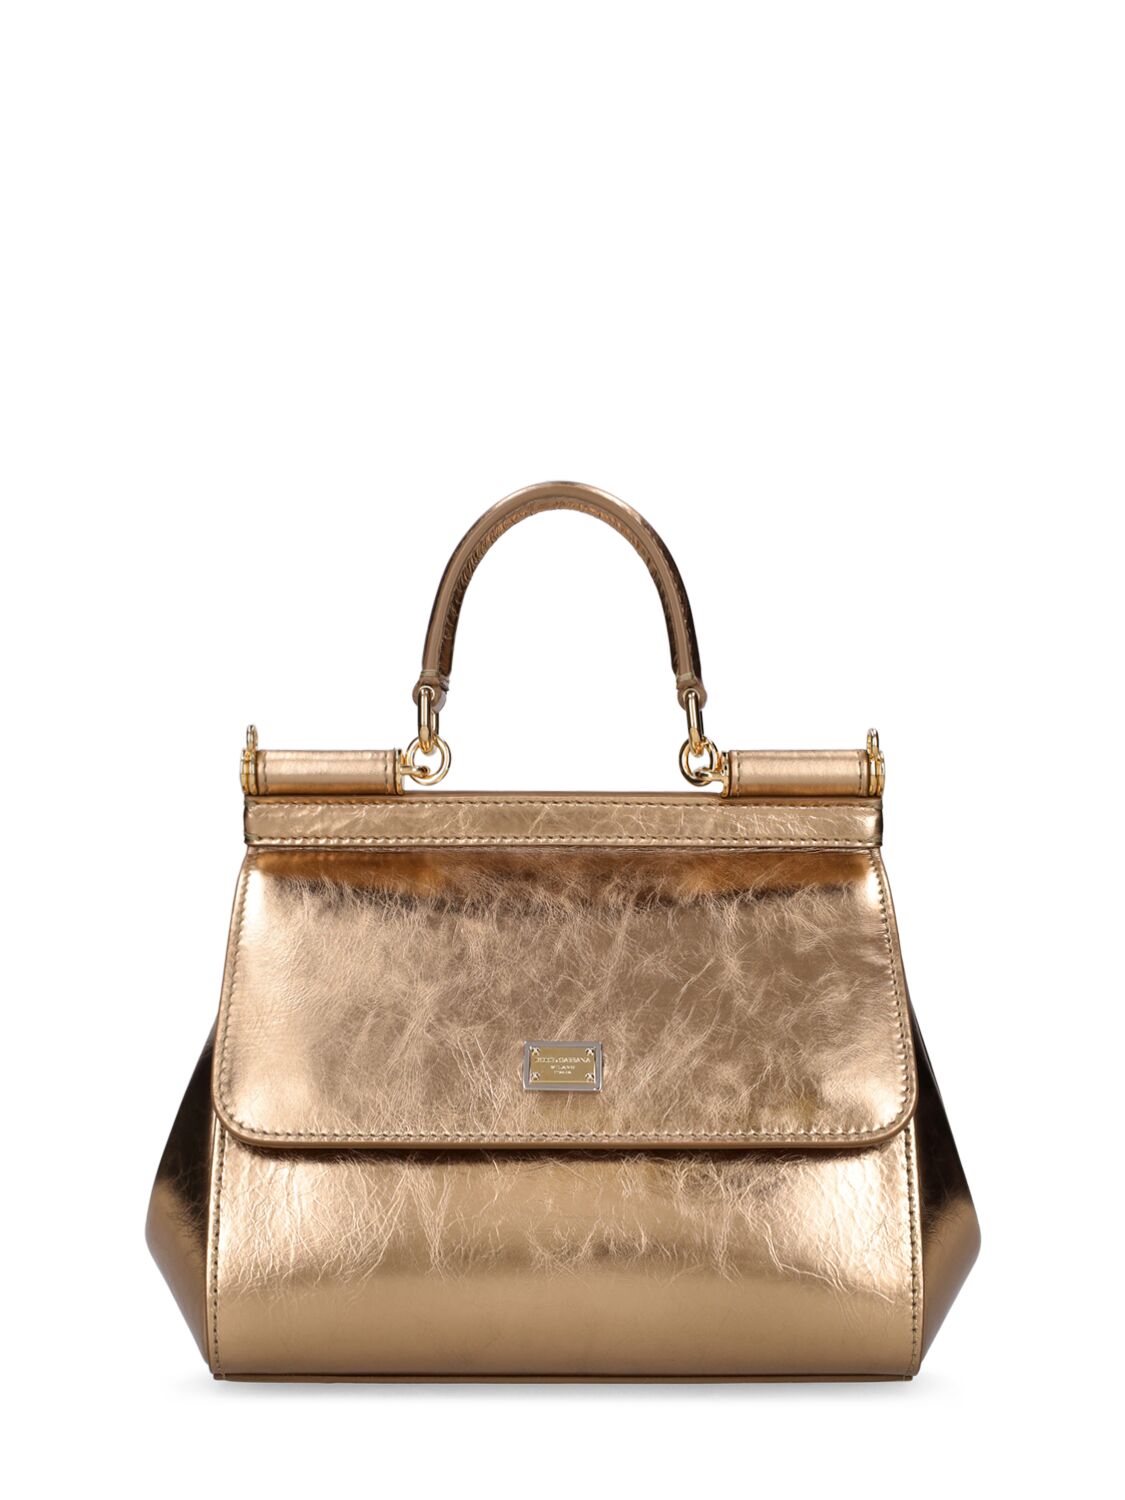 Dolce & Gabbana Small Women's Miss Sicily Leather Handbag Gold Metallic